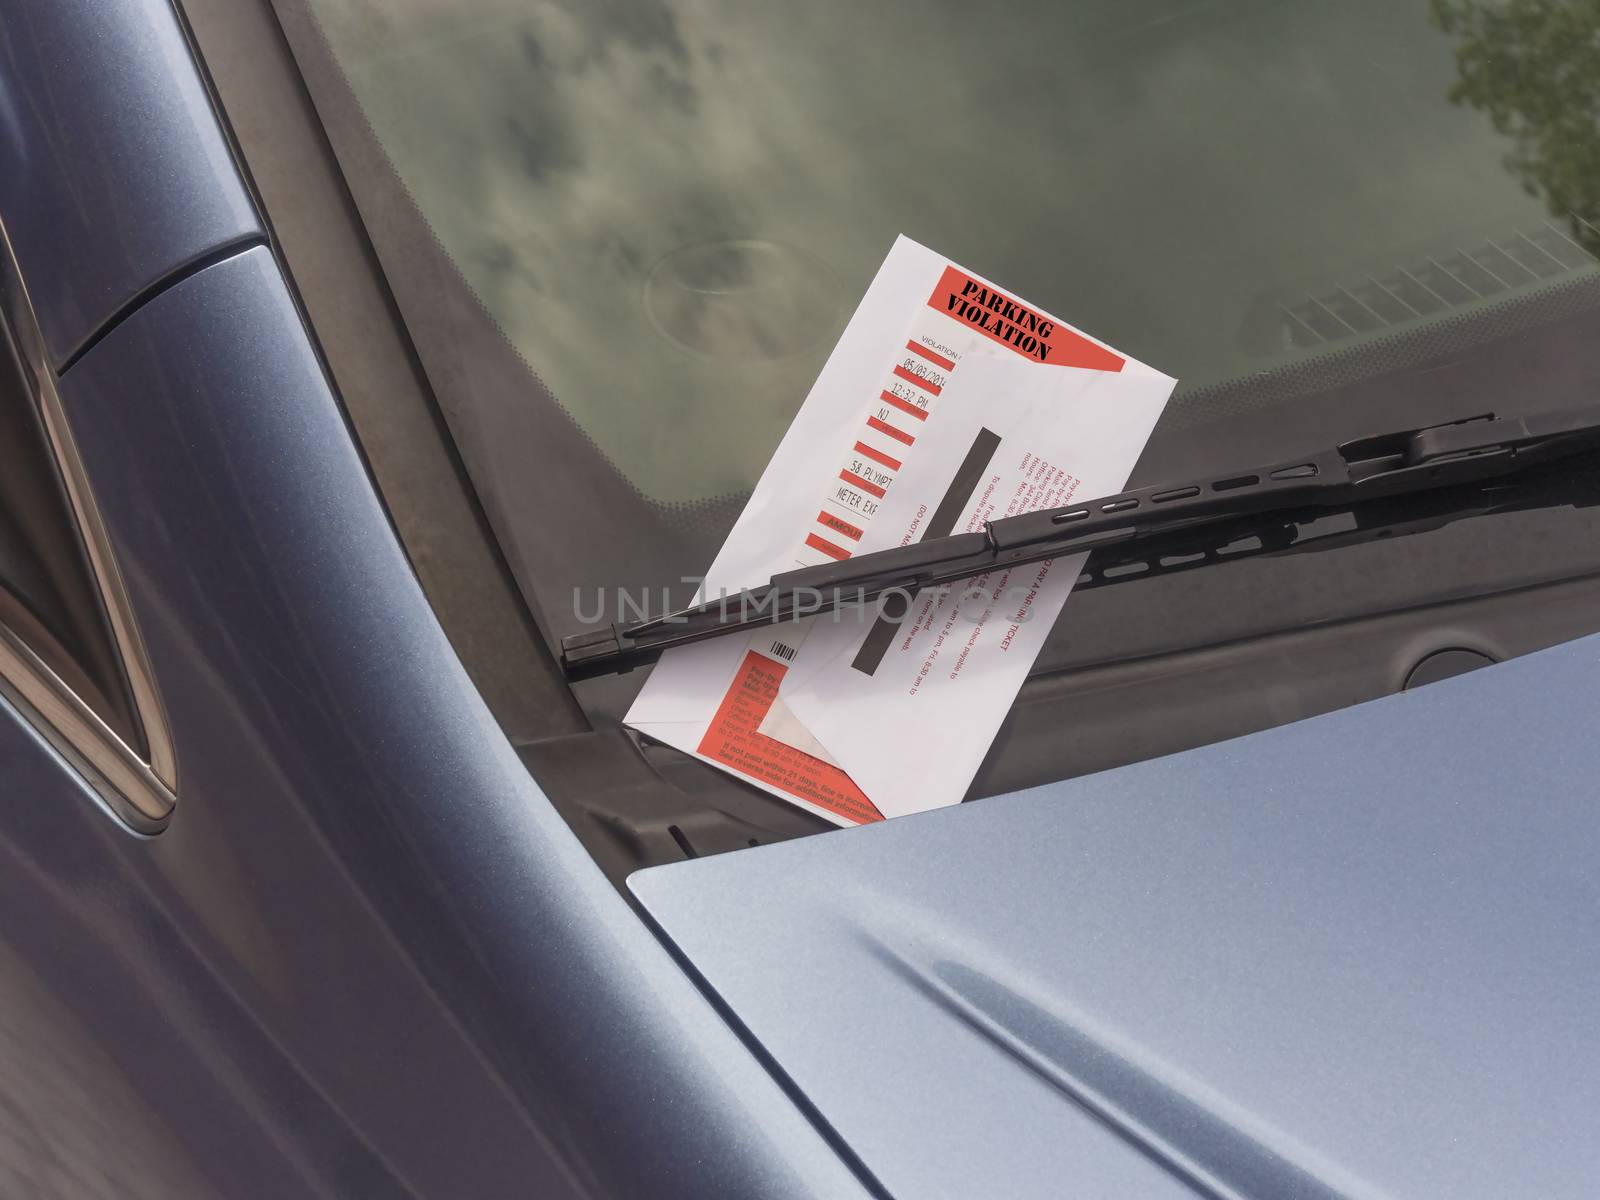 parking ticket violation on motor car windscreen or windshield.